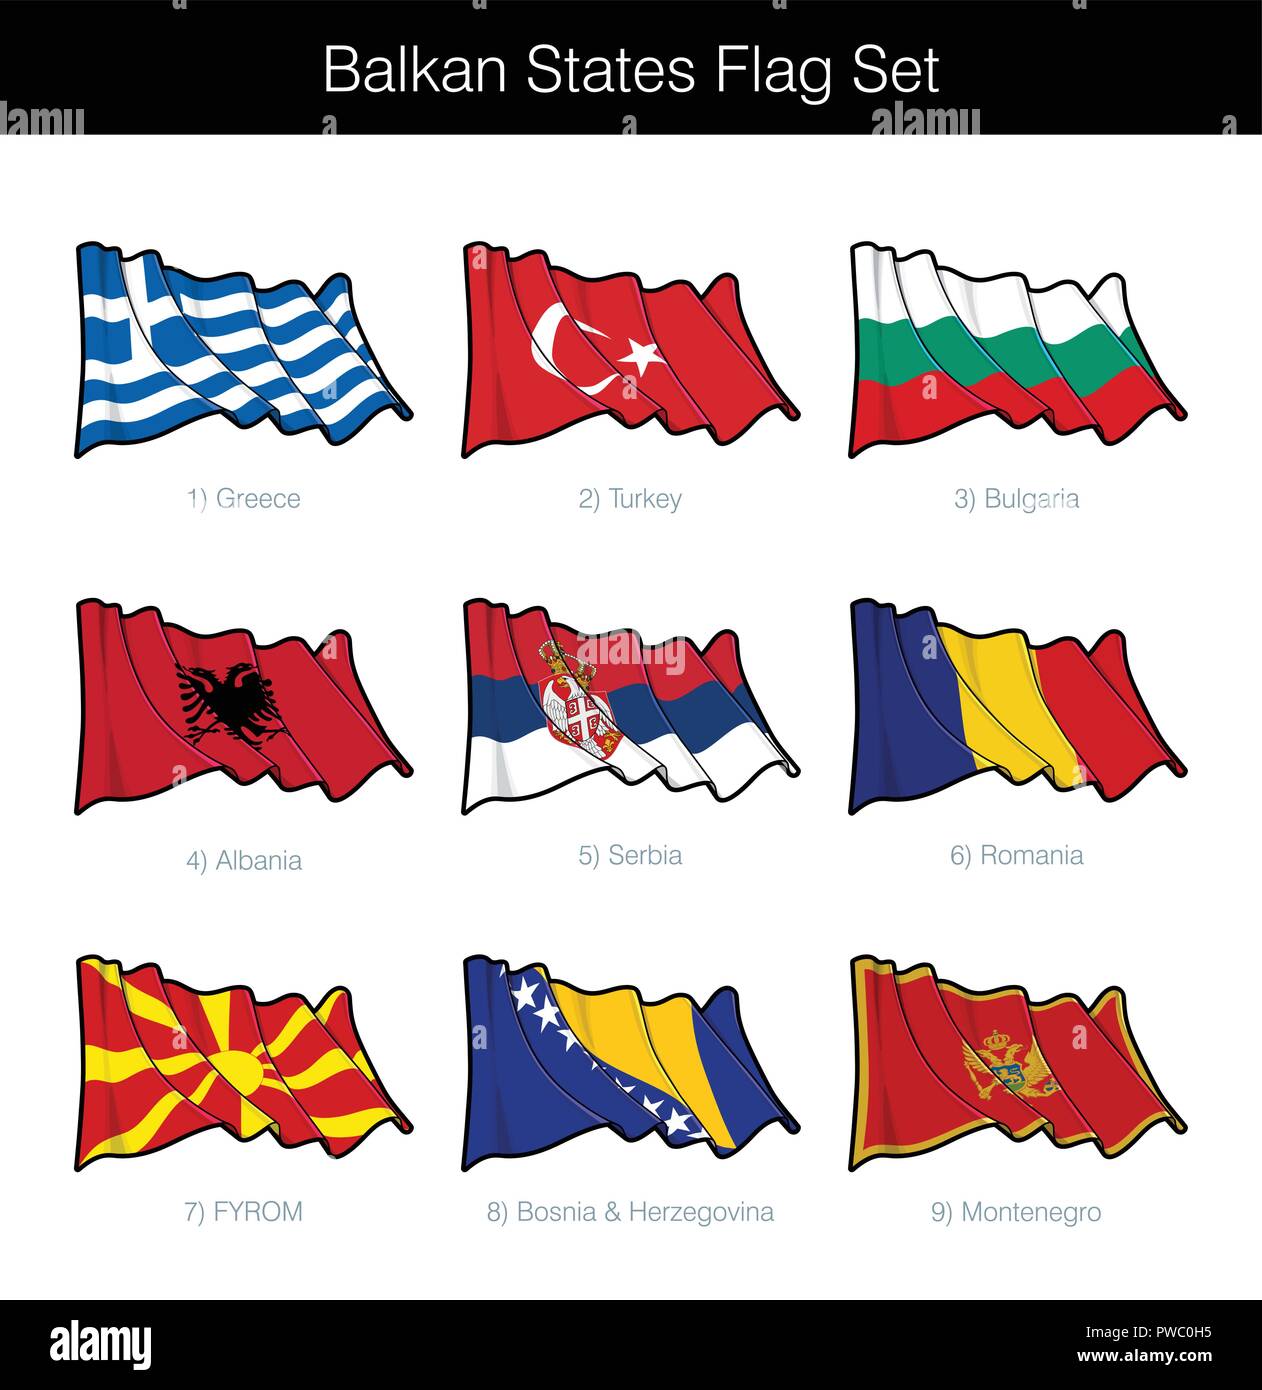 Balkan States Waving Flag Set. The set includes the flags of Greece, Turkey, Bulgaria Albania, Serbia, Romania, FYROM, Bosnia Herzegovina and Monteneg Stock Vector